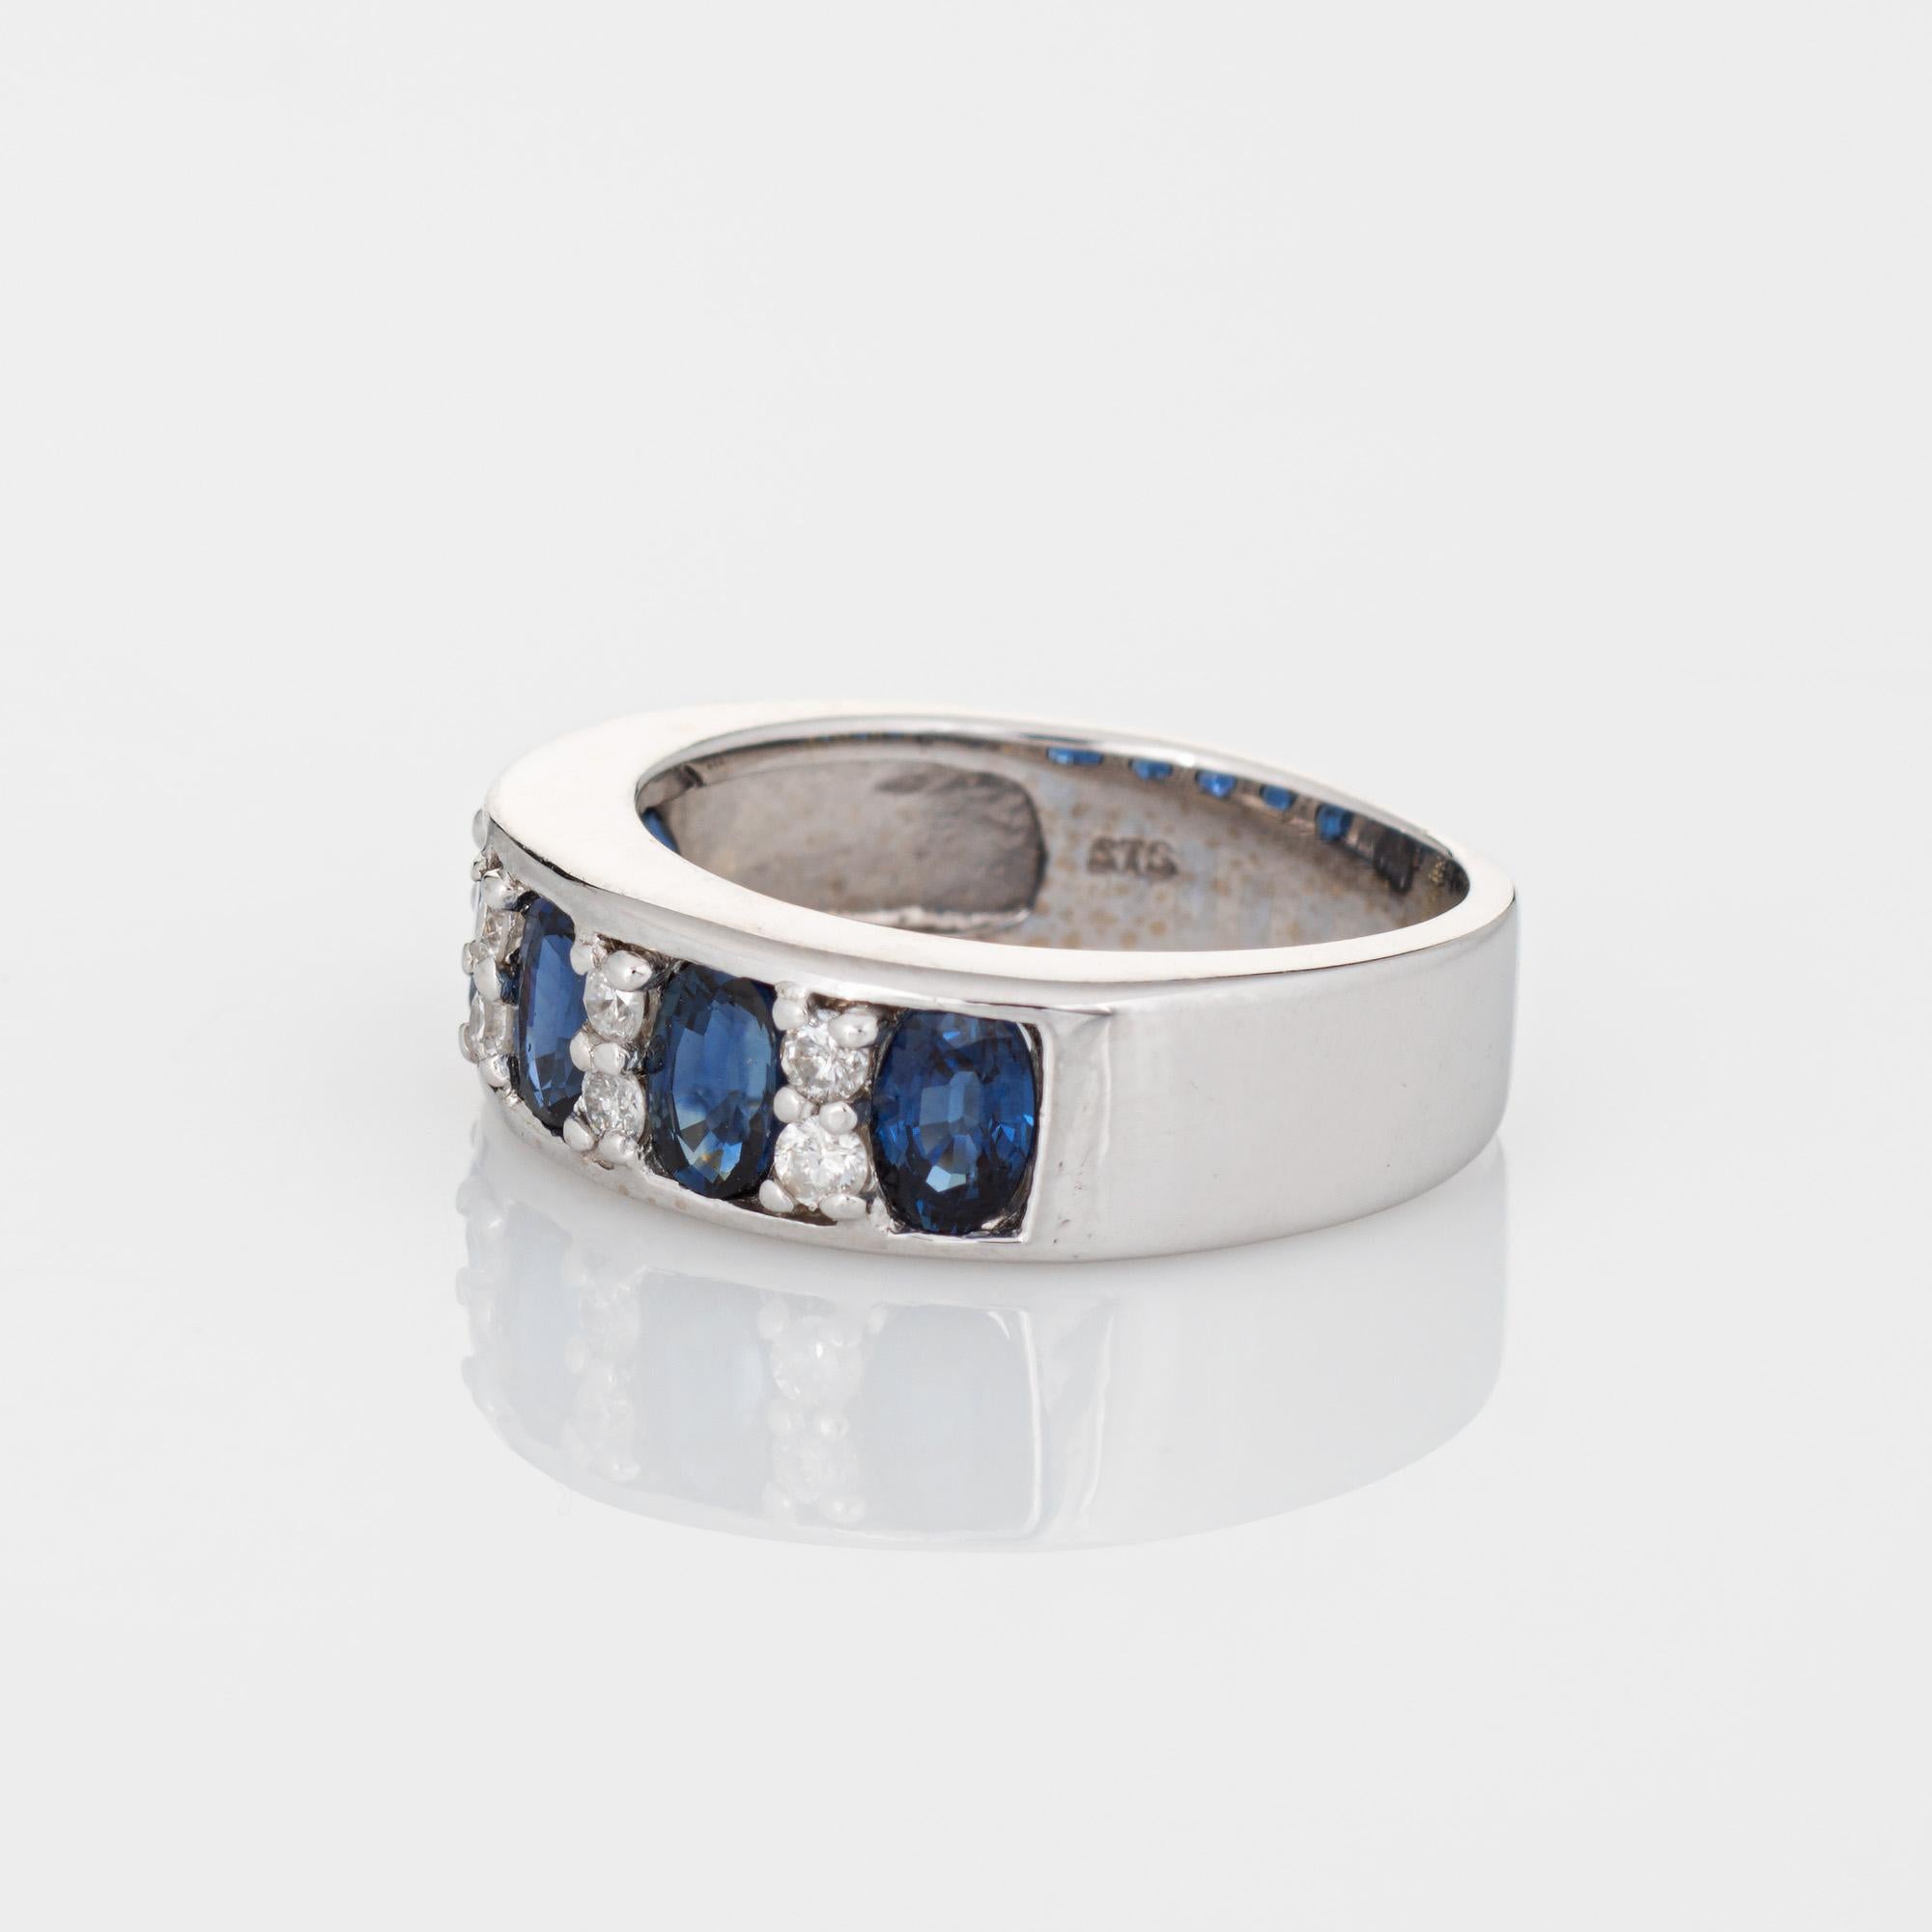 Oval Cut Sapphire Diamond Ring Estate 14k White Gold Sz 4.5 Pinky Band Fine Jewelry